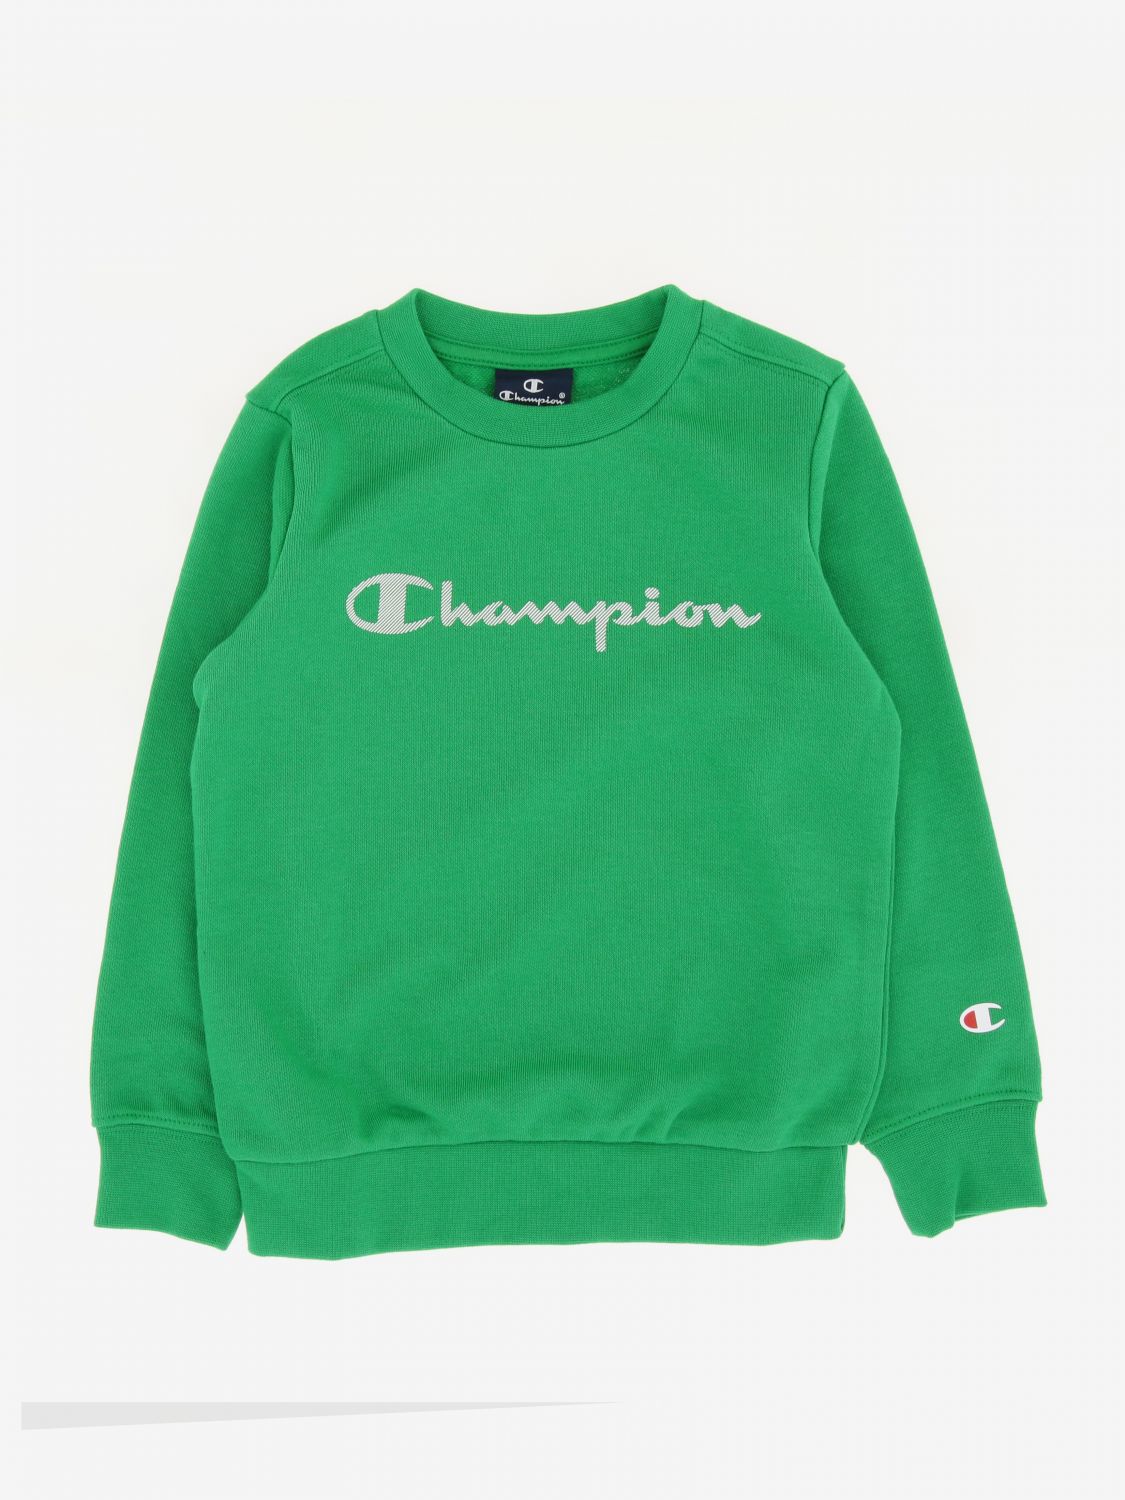 green champion jumper